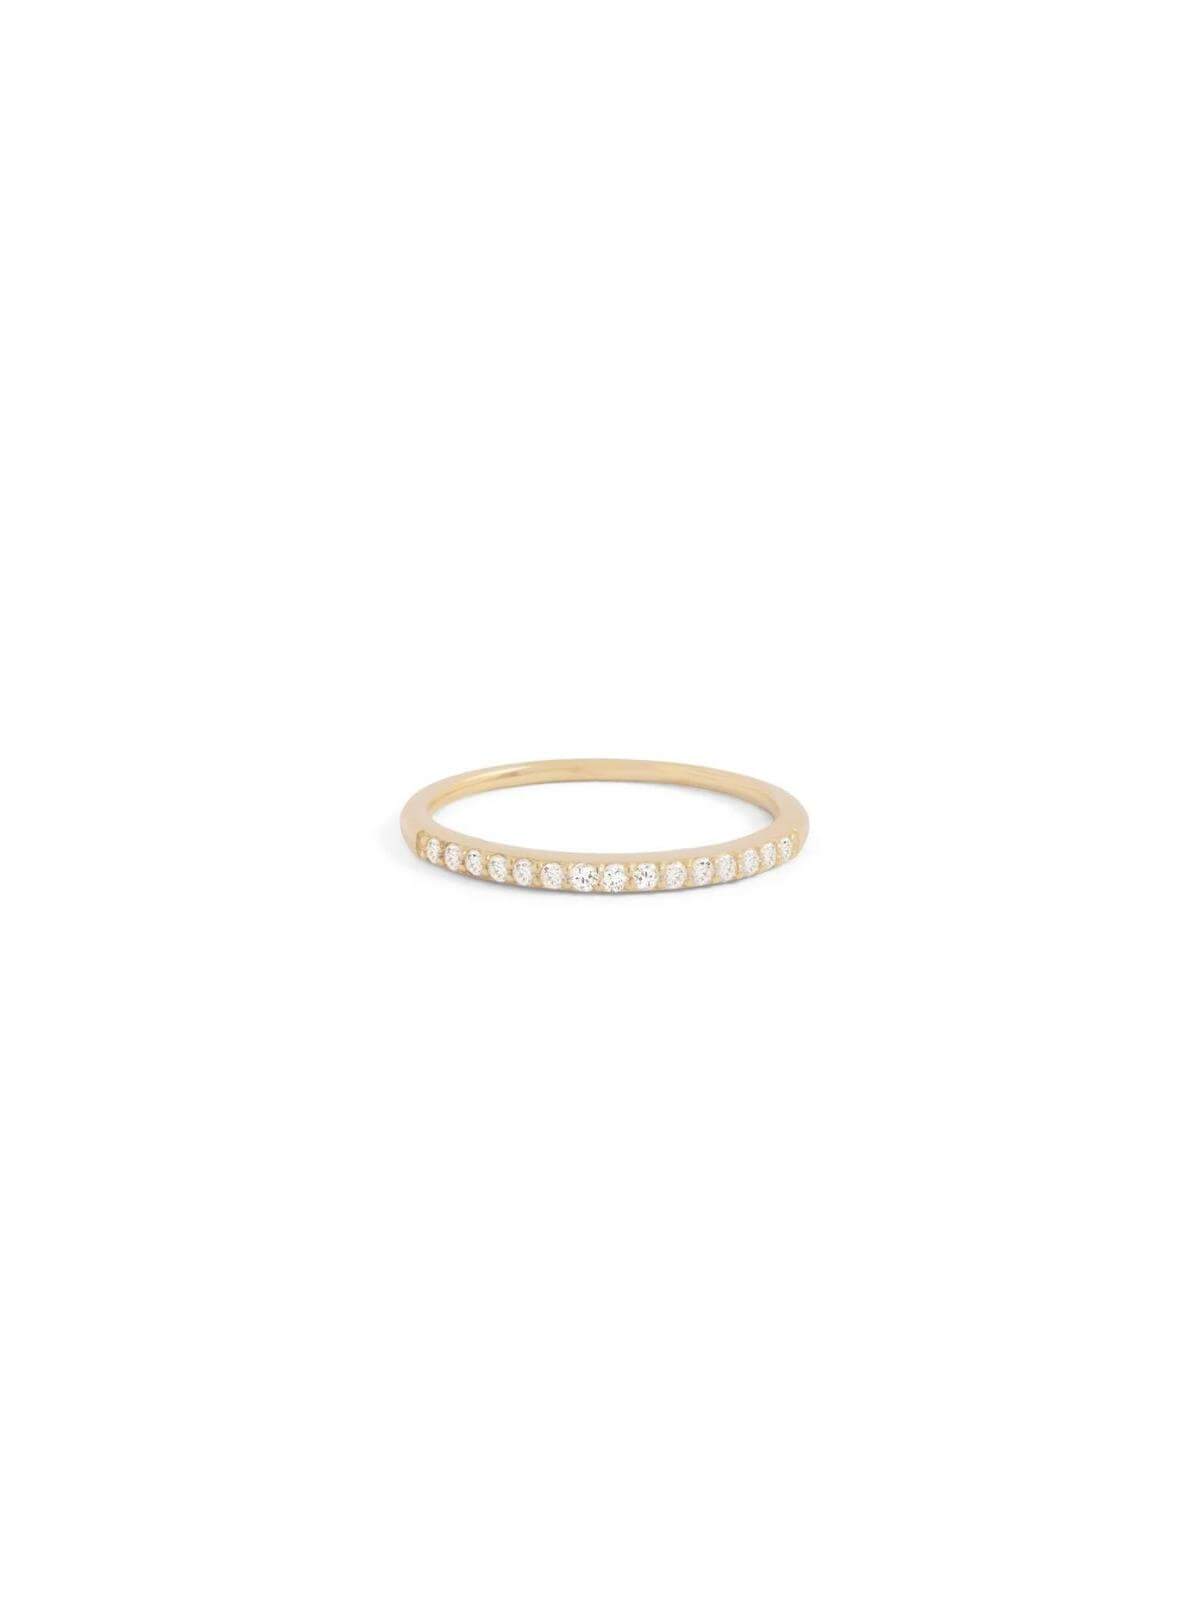 By Charlotte | 14K Gold Diamond Halo Ring | Perlu